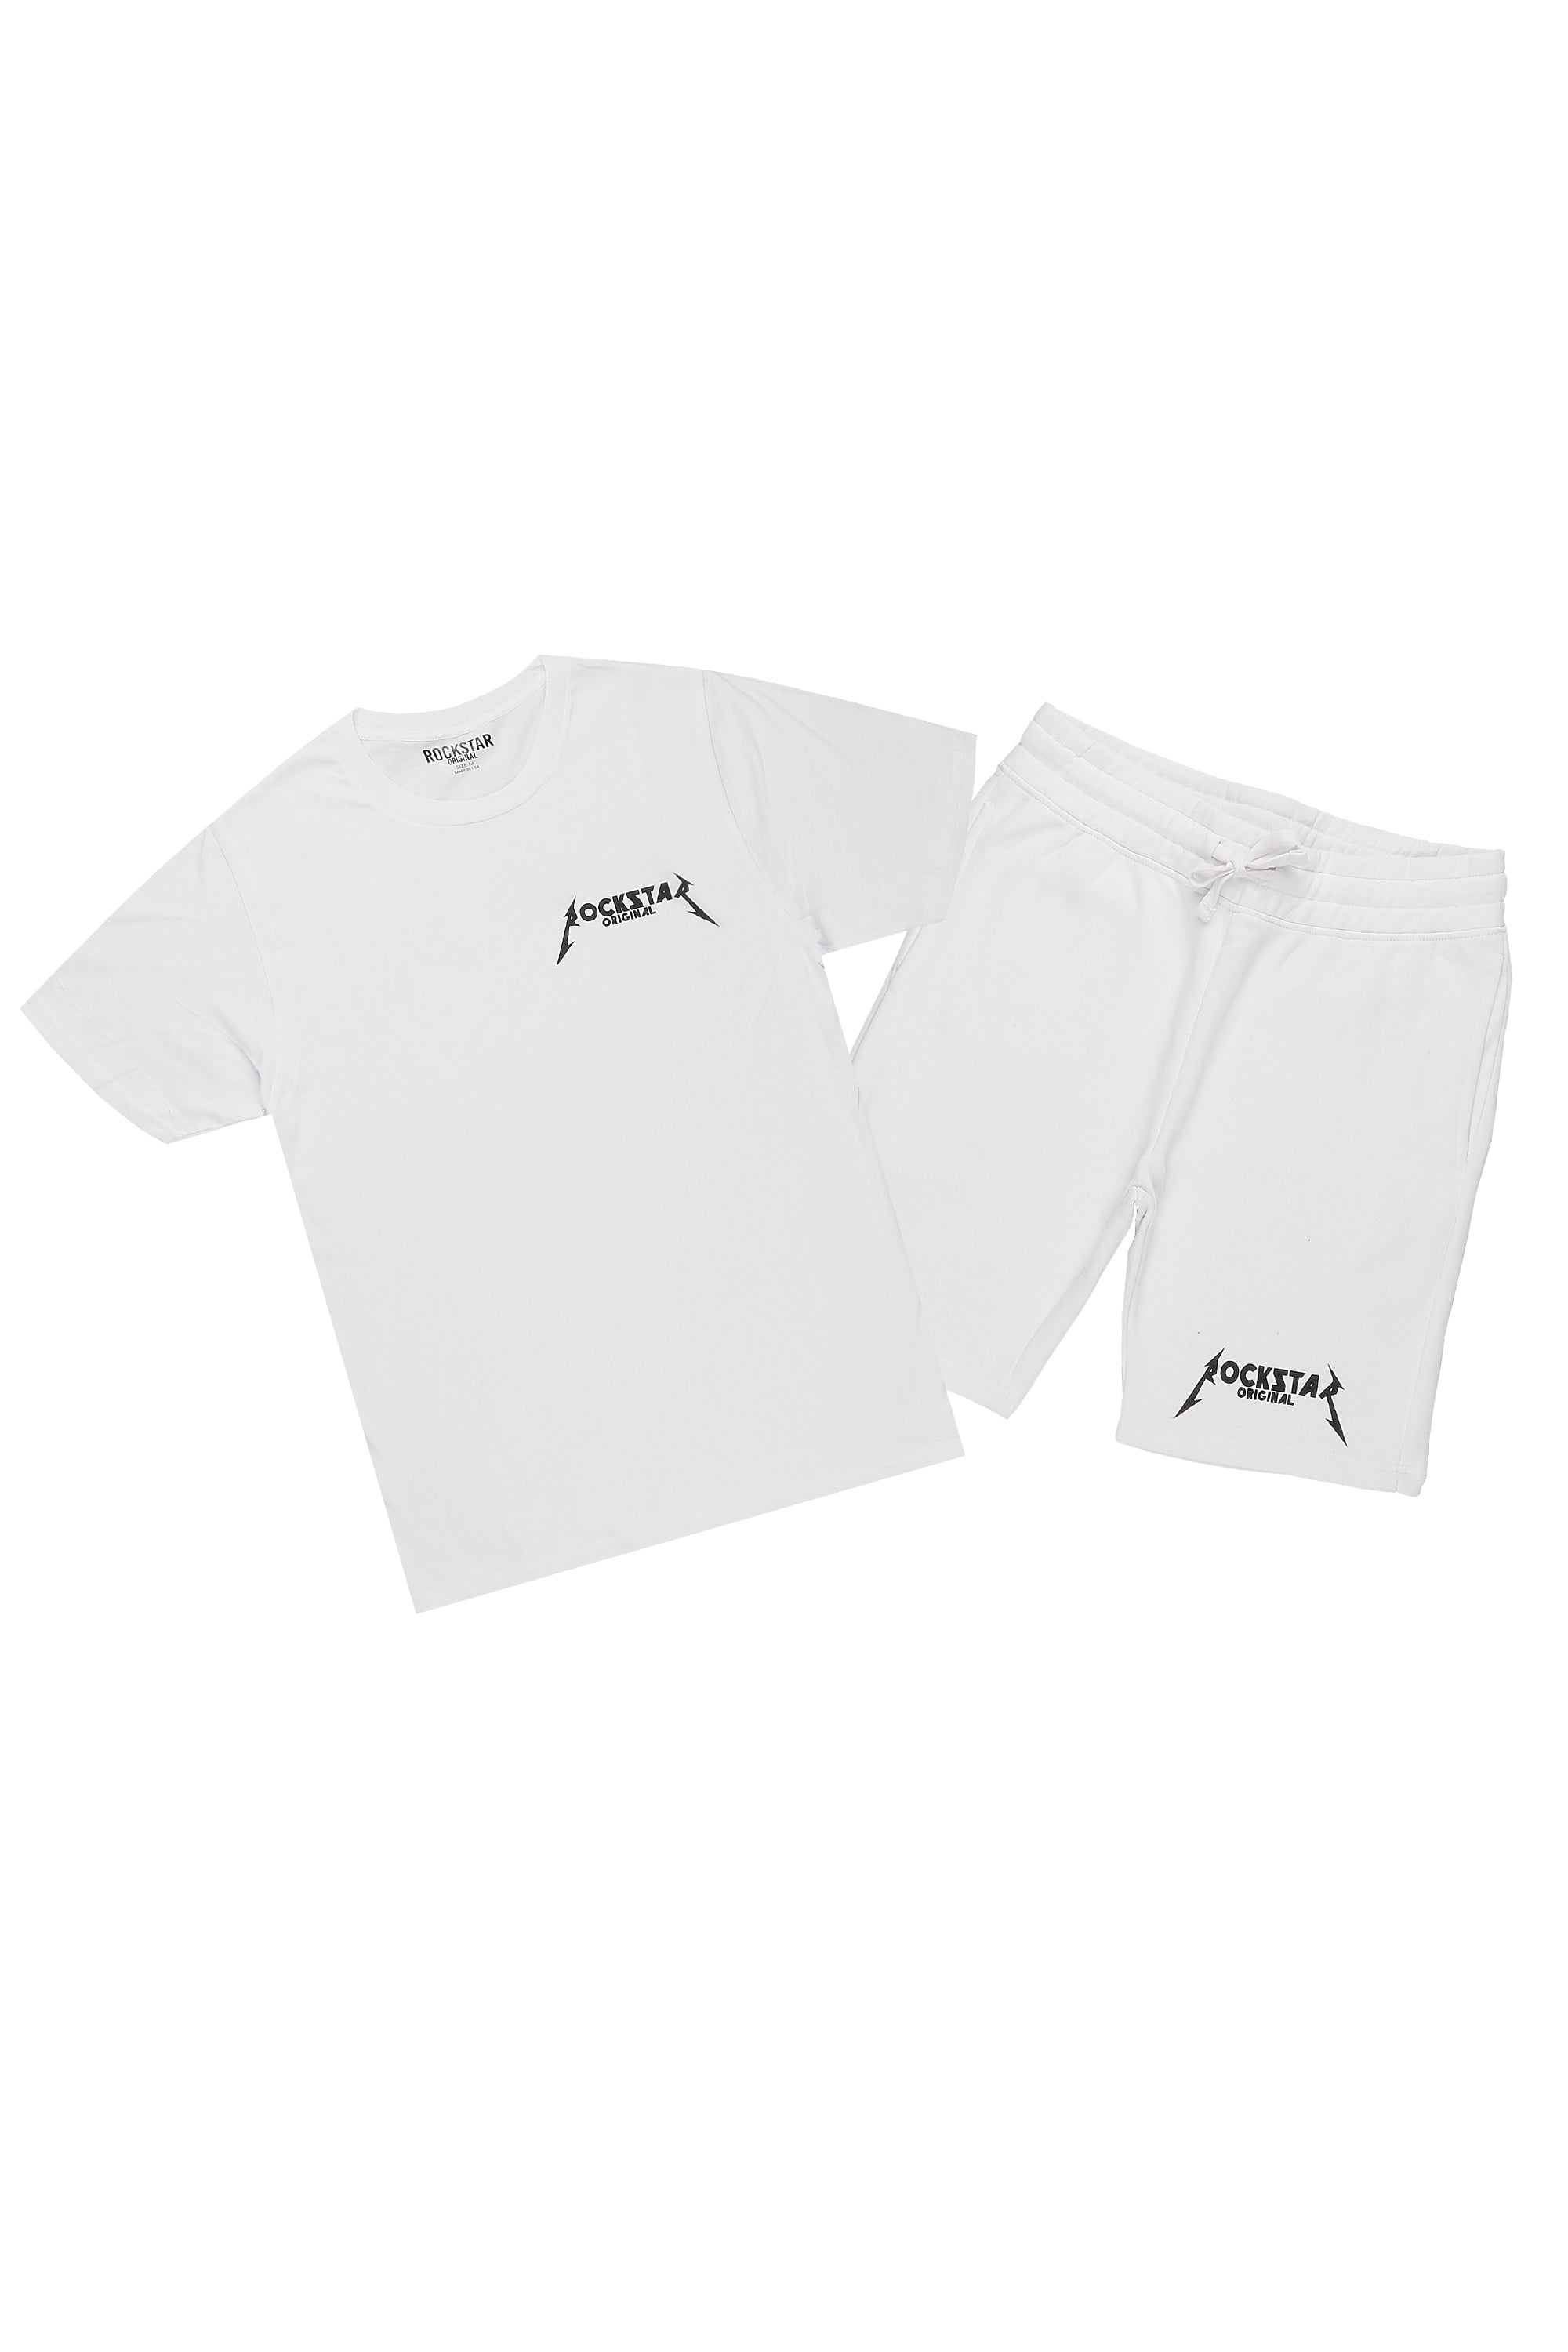 2-piece Regular Fit Shorts and T-shirt Set